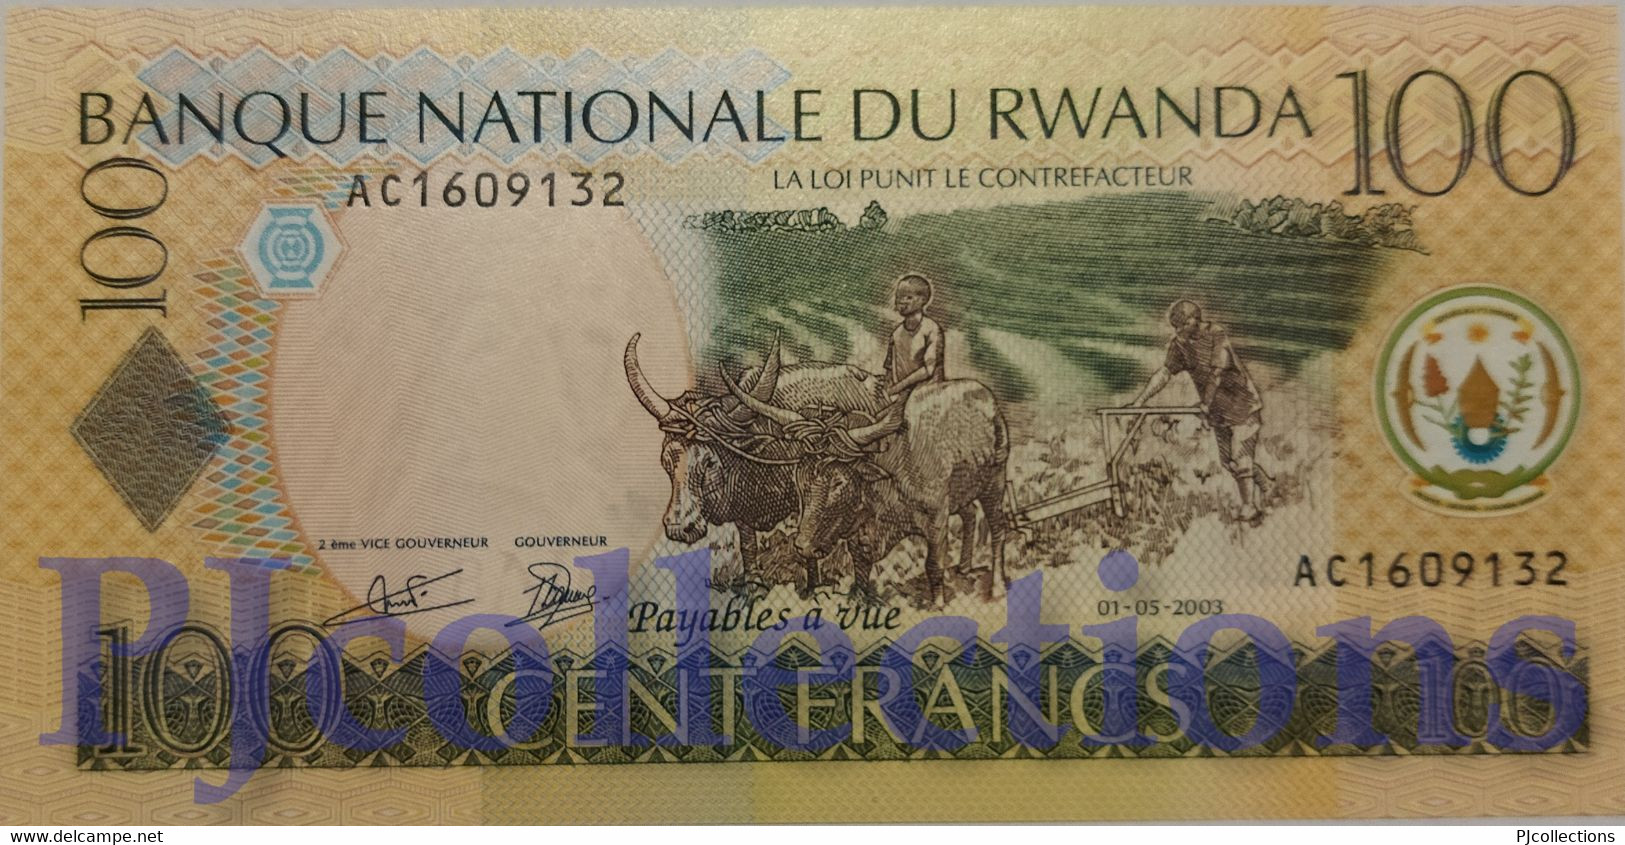 RWANDA 100 FRANCS 2003 PICK 29a UNC PREFIX "AA" - Rwanda